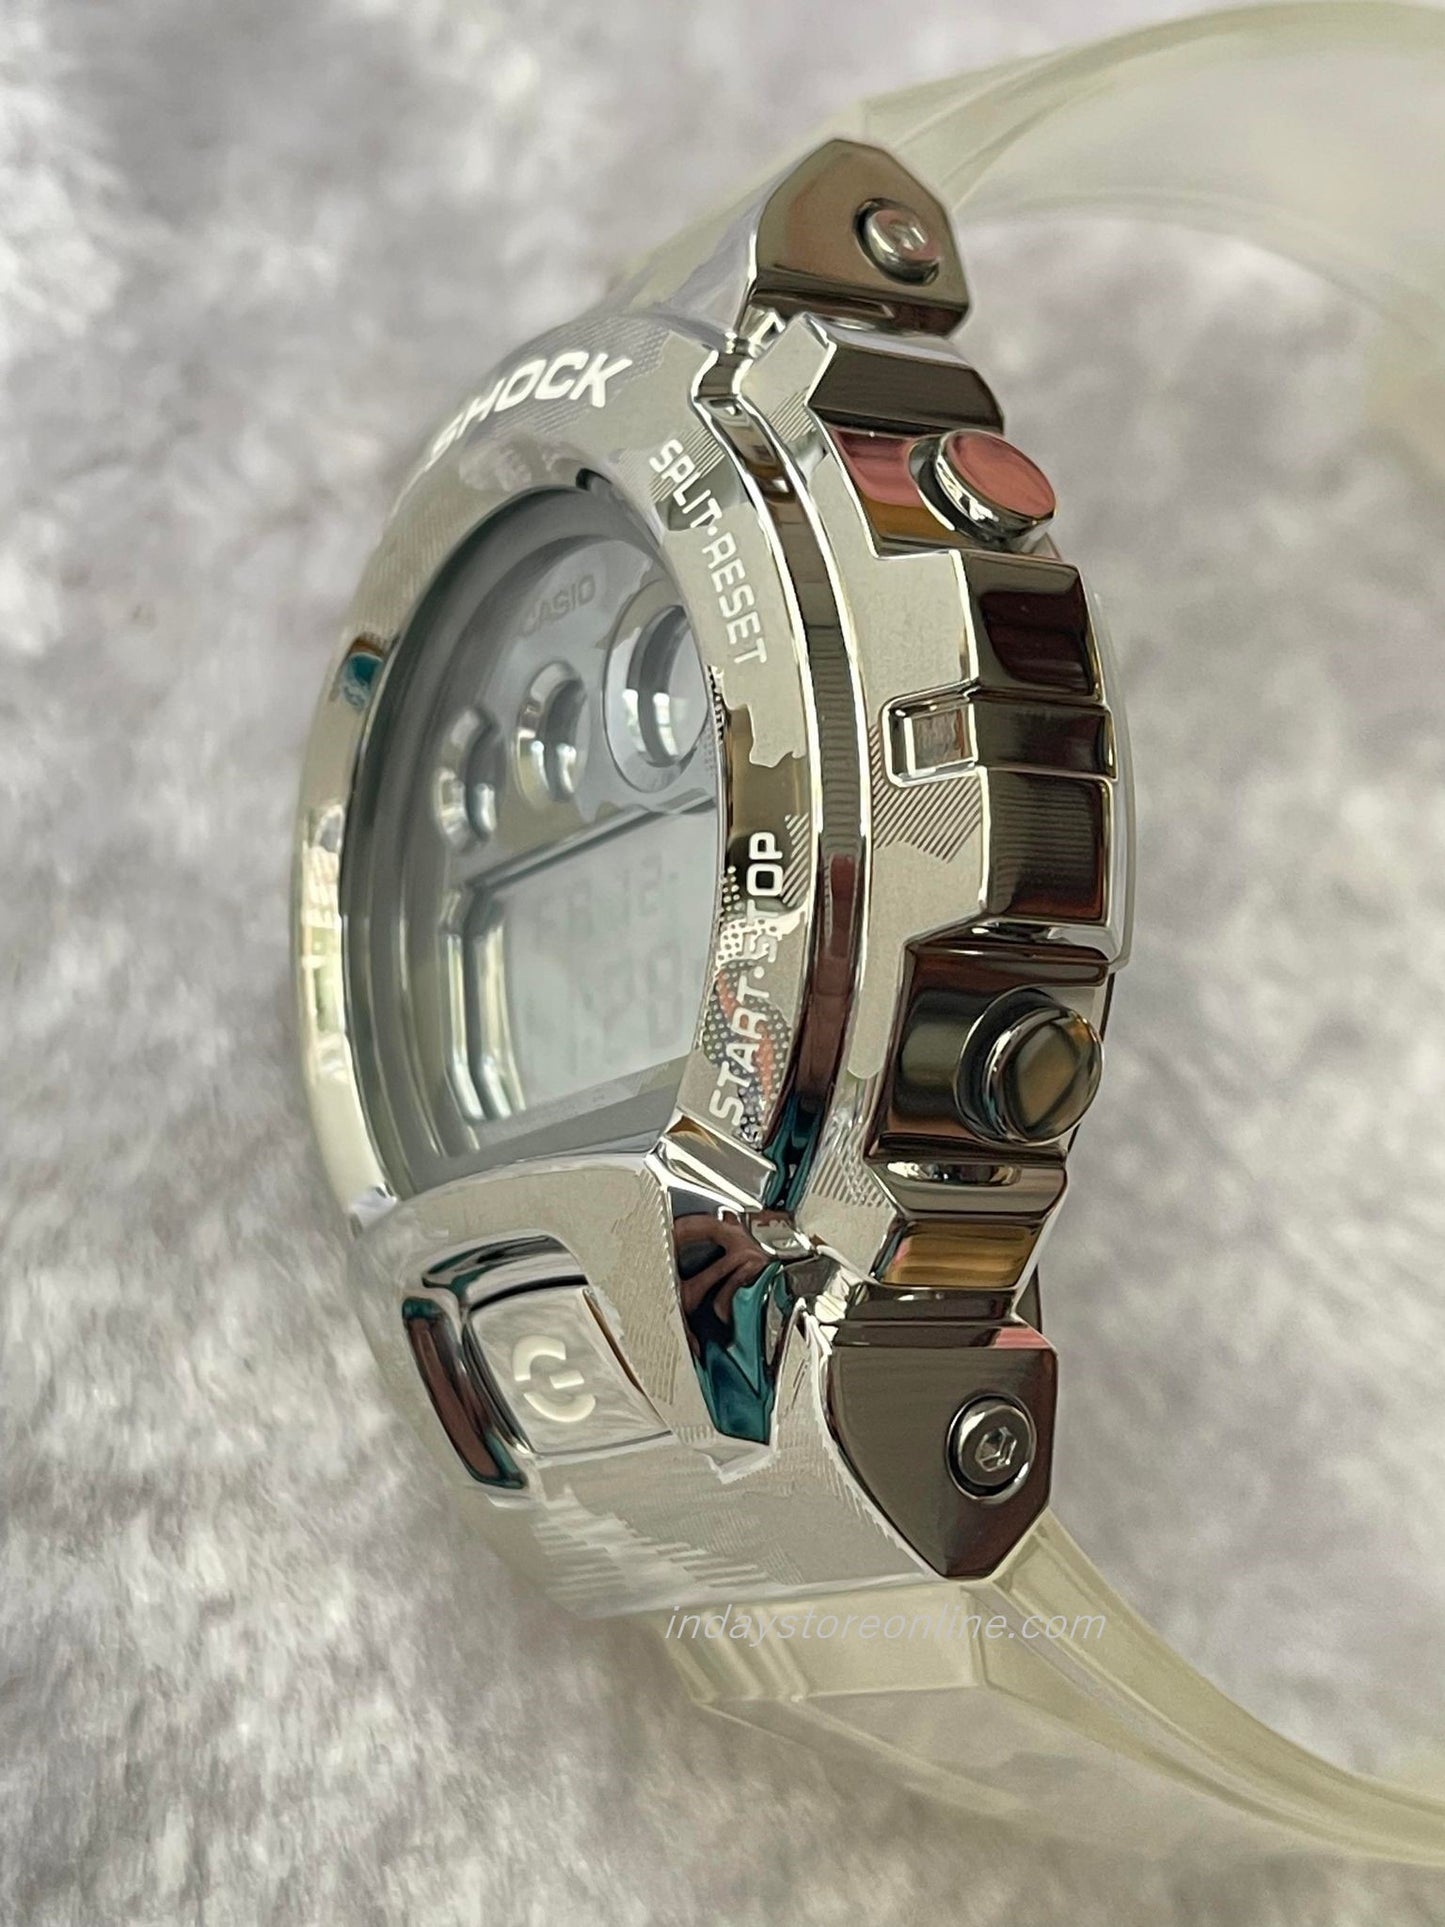 Casio G-Shock Men's Watch GM-6900SCM-1 Digital 6900 Series Transparent Color Shock Resistant 200-meter Water Resistance Mineral Glass